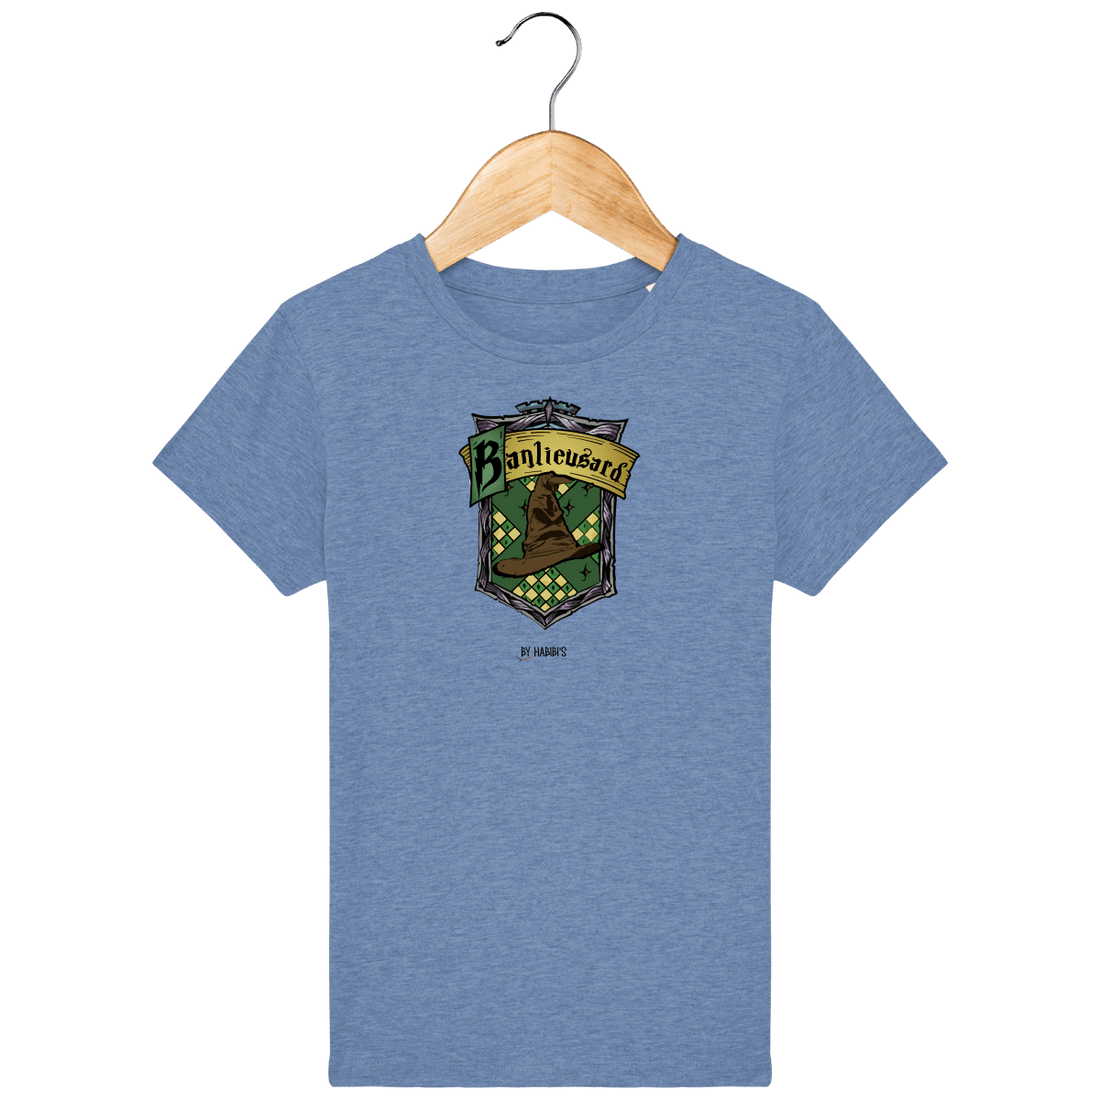 Enfant & Bébé>Tee-shirts - T-shirt Enfant <br> Serpentard Banlieusard